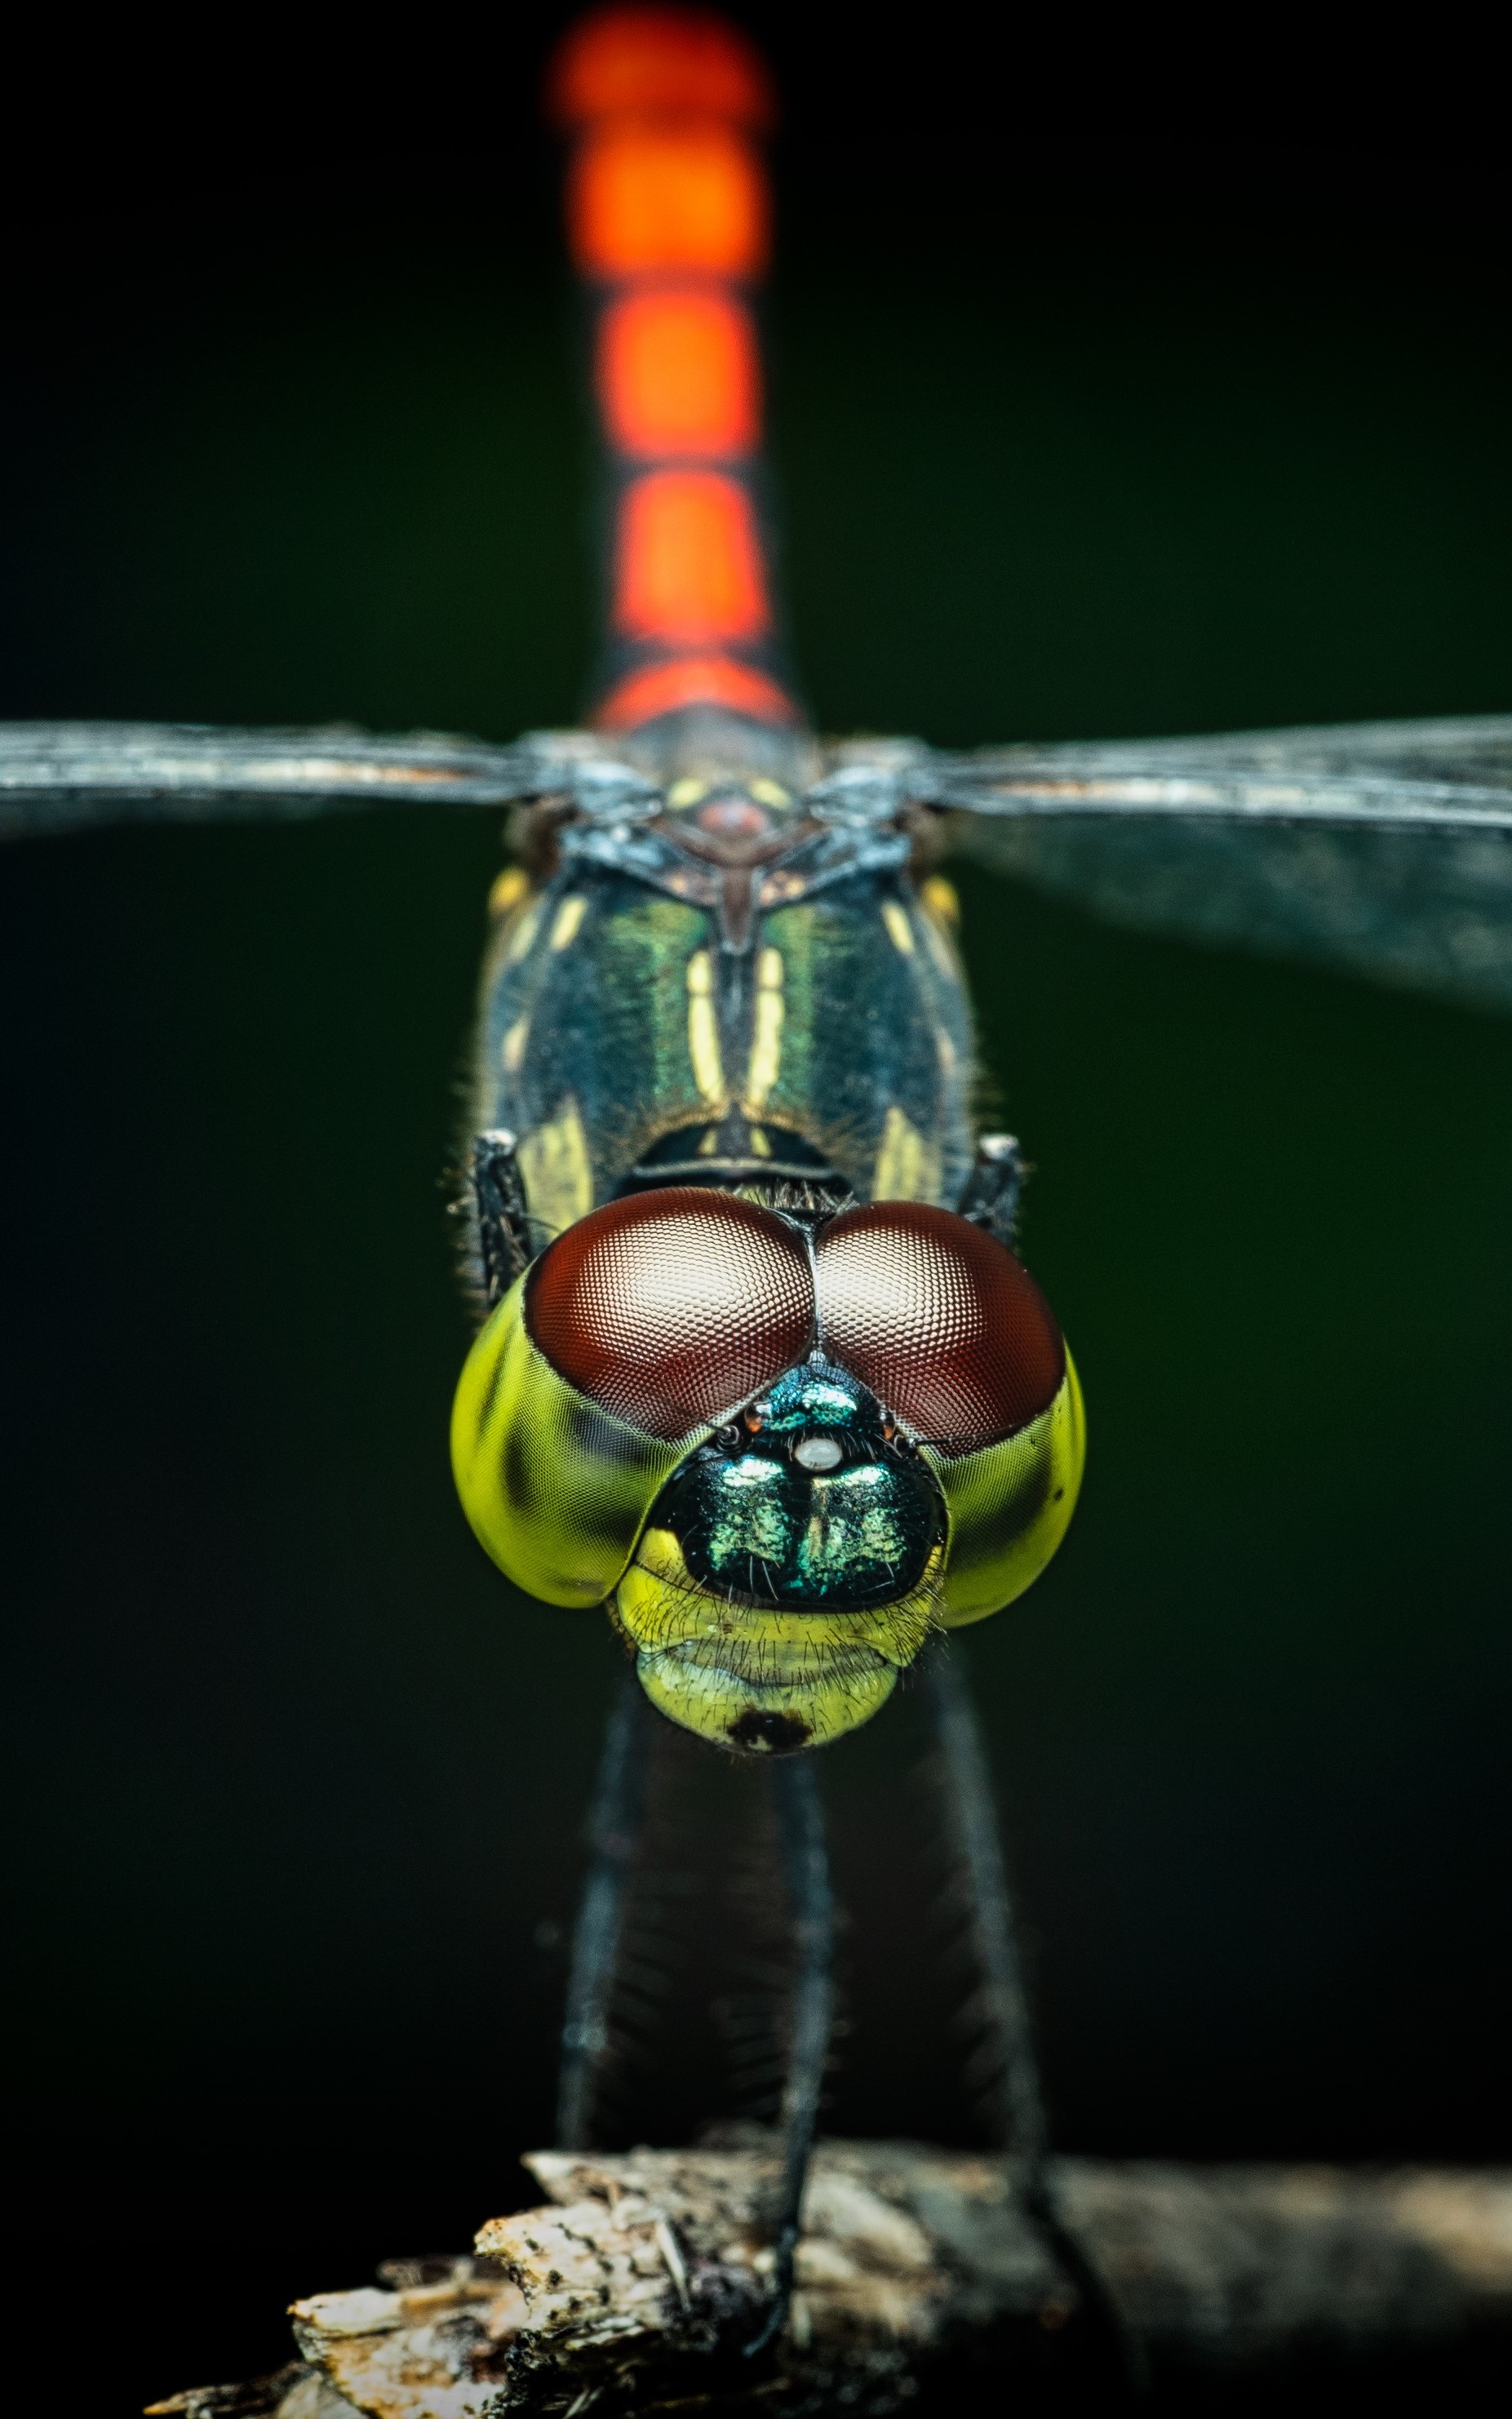 Dragonfly amazing eyes.